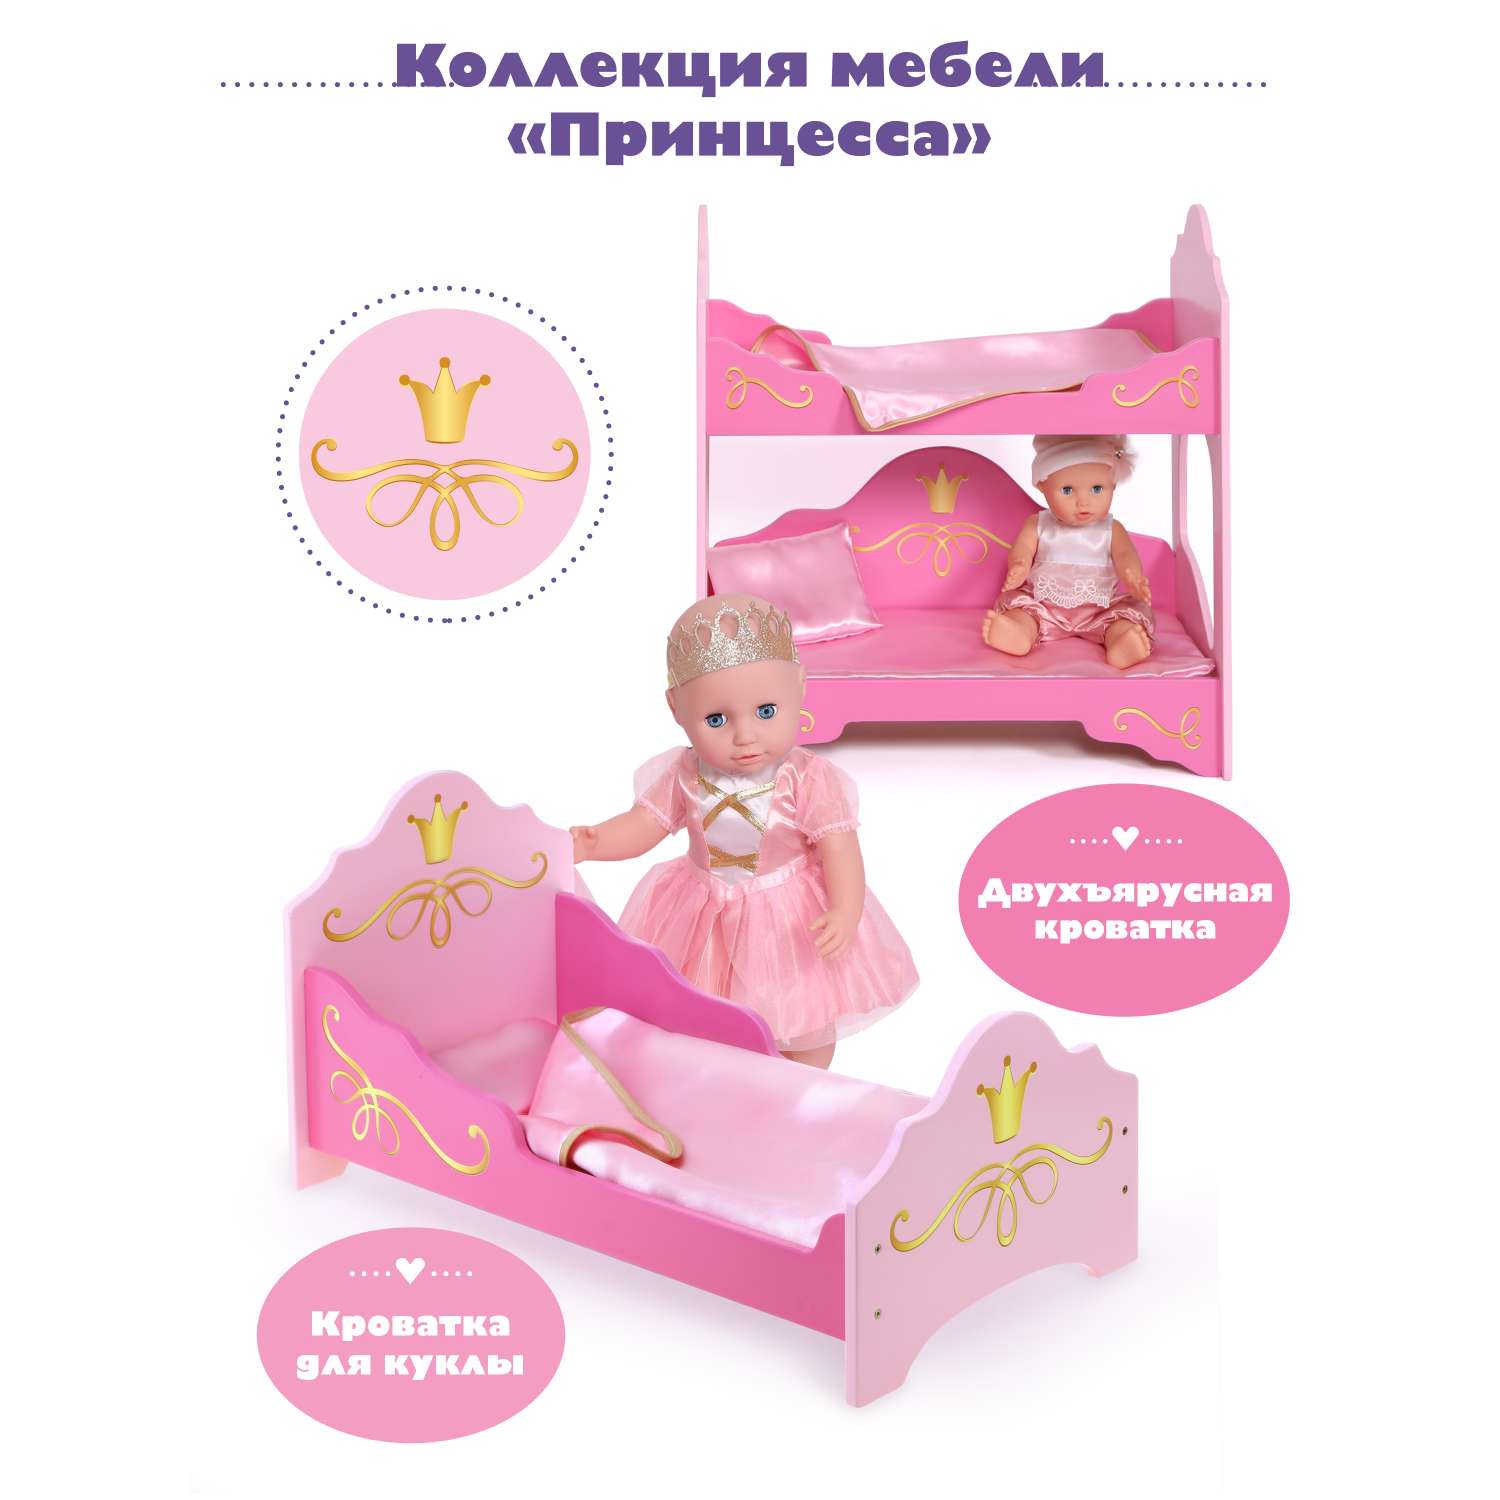 Кроватка-люлька Mary Poppins с балдахином кукольная мебель для куклы пупса кукол. Принцесса 67415 - фото 4